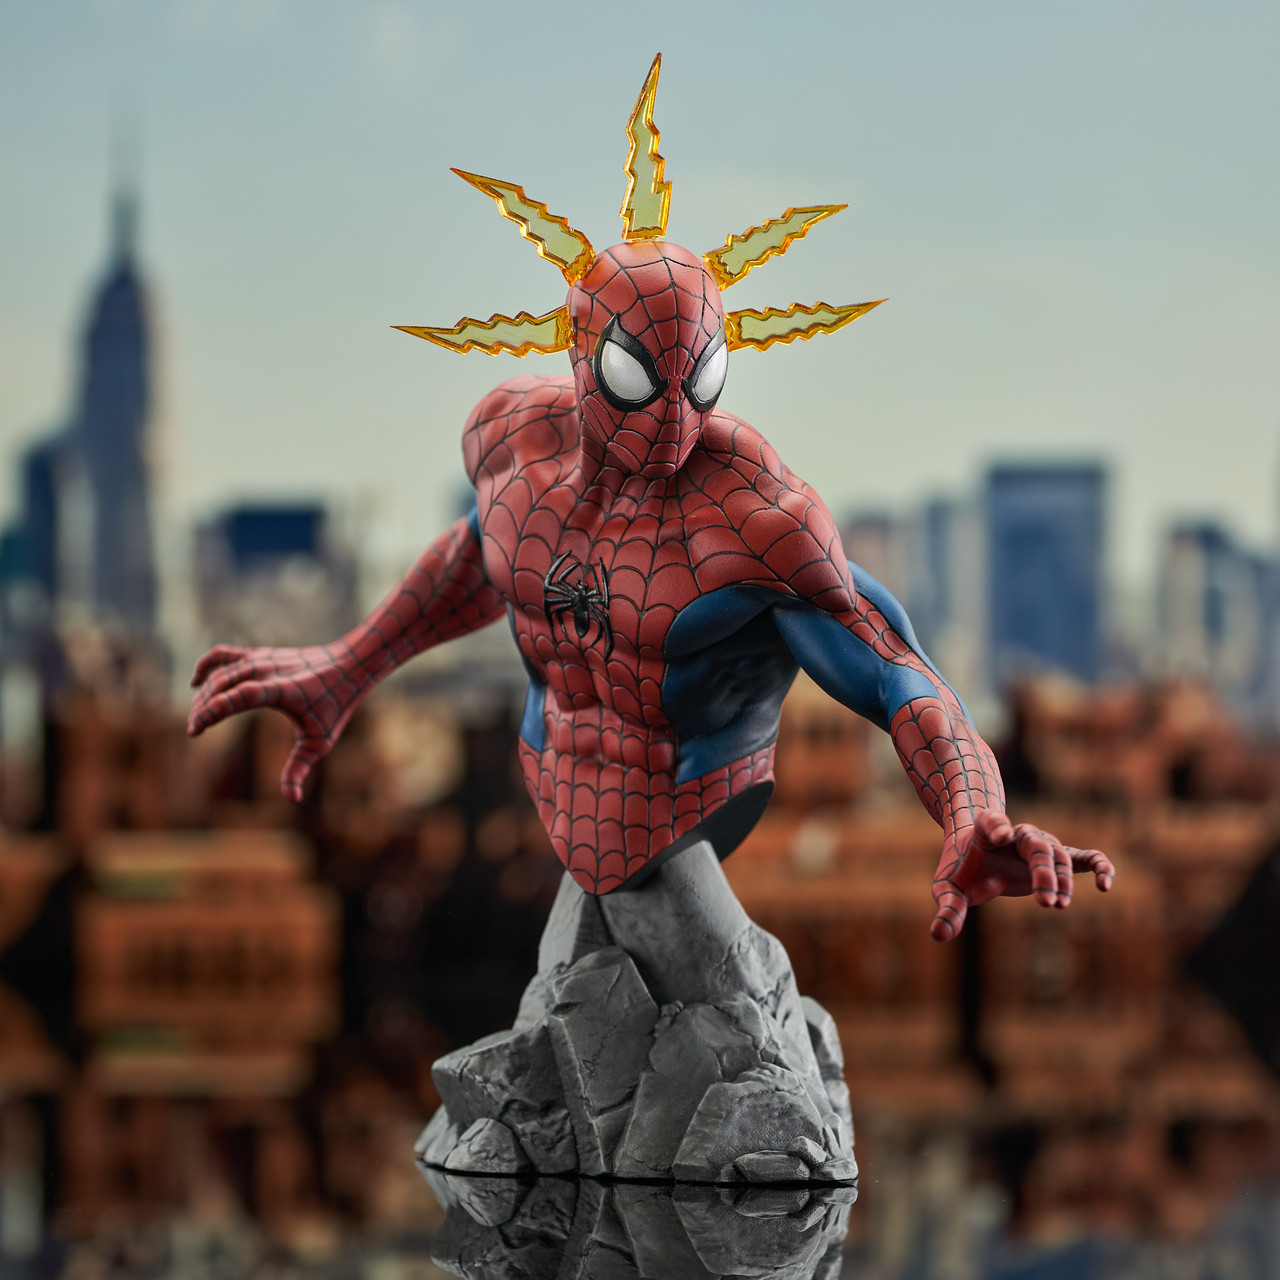 Venom Spiderman Marvel Cinematic Universe MCU Model Statue Action Figure Toy